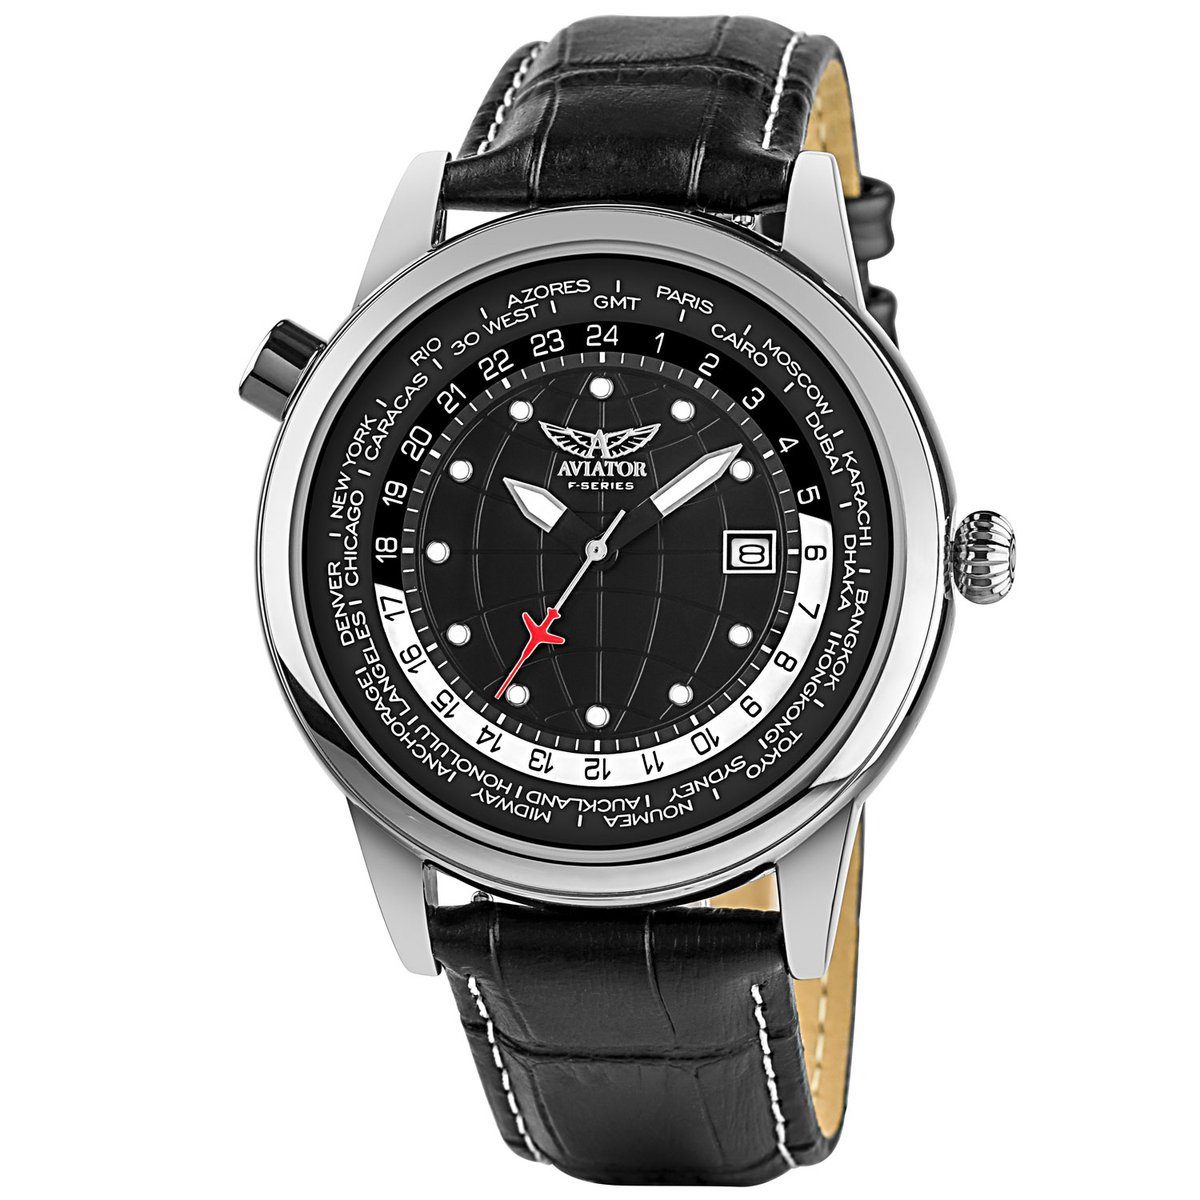 Aviator heren horloge - 3ATM - leren armband - diverse functionaliteit - AVW6975G354